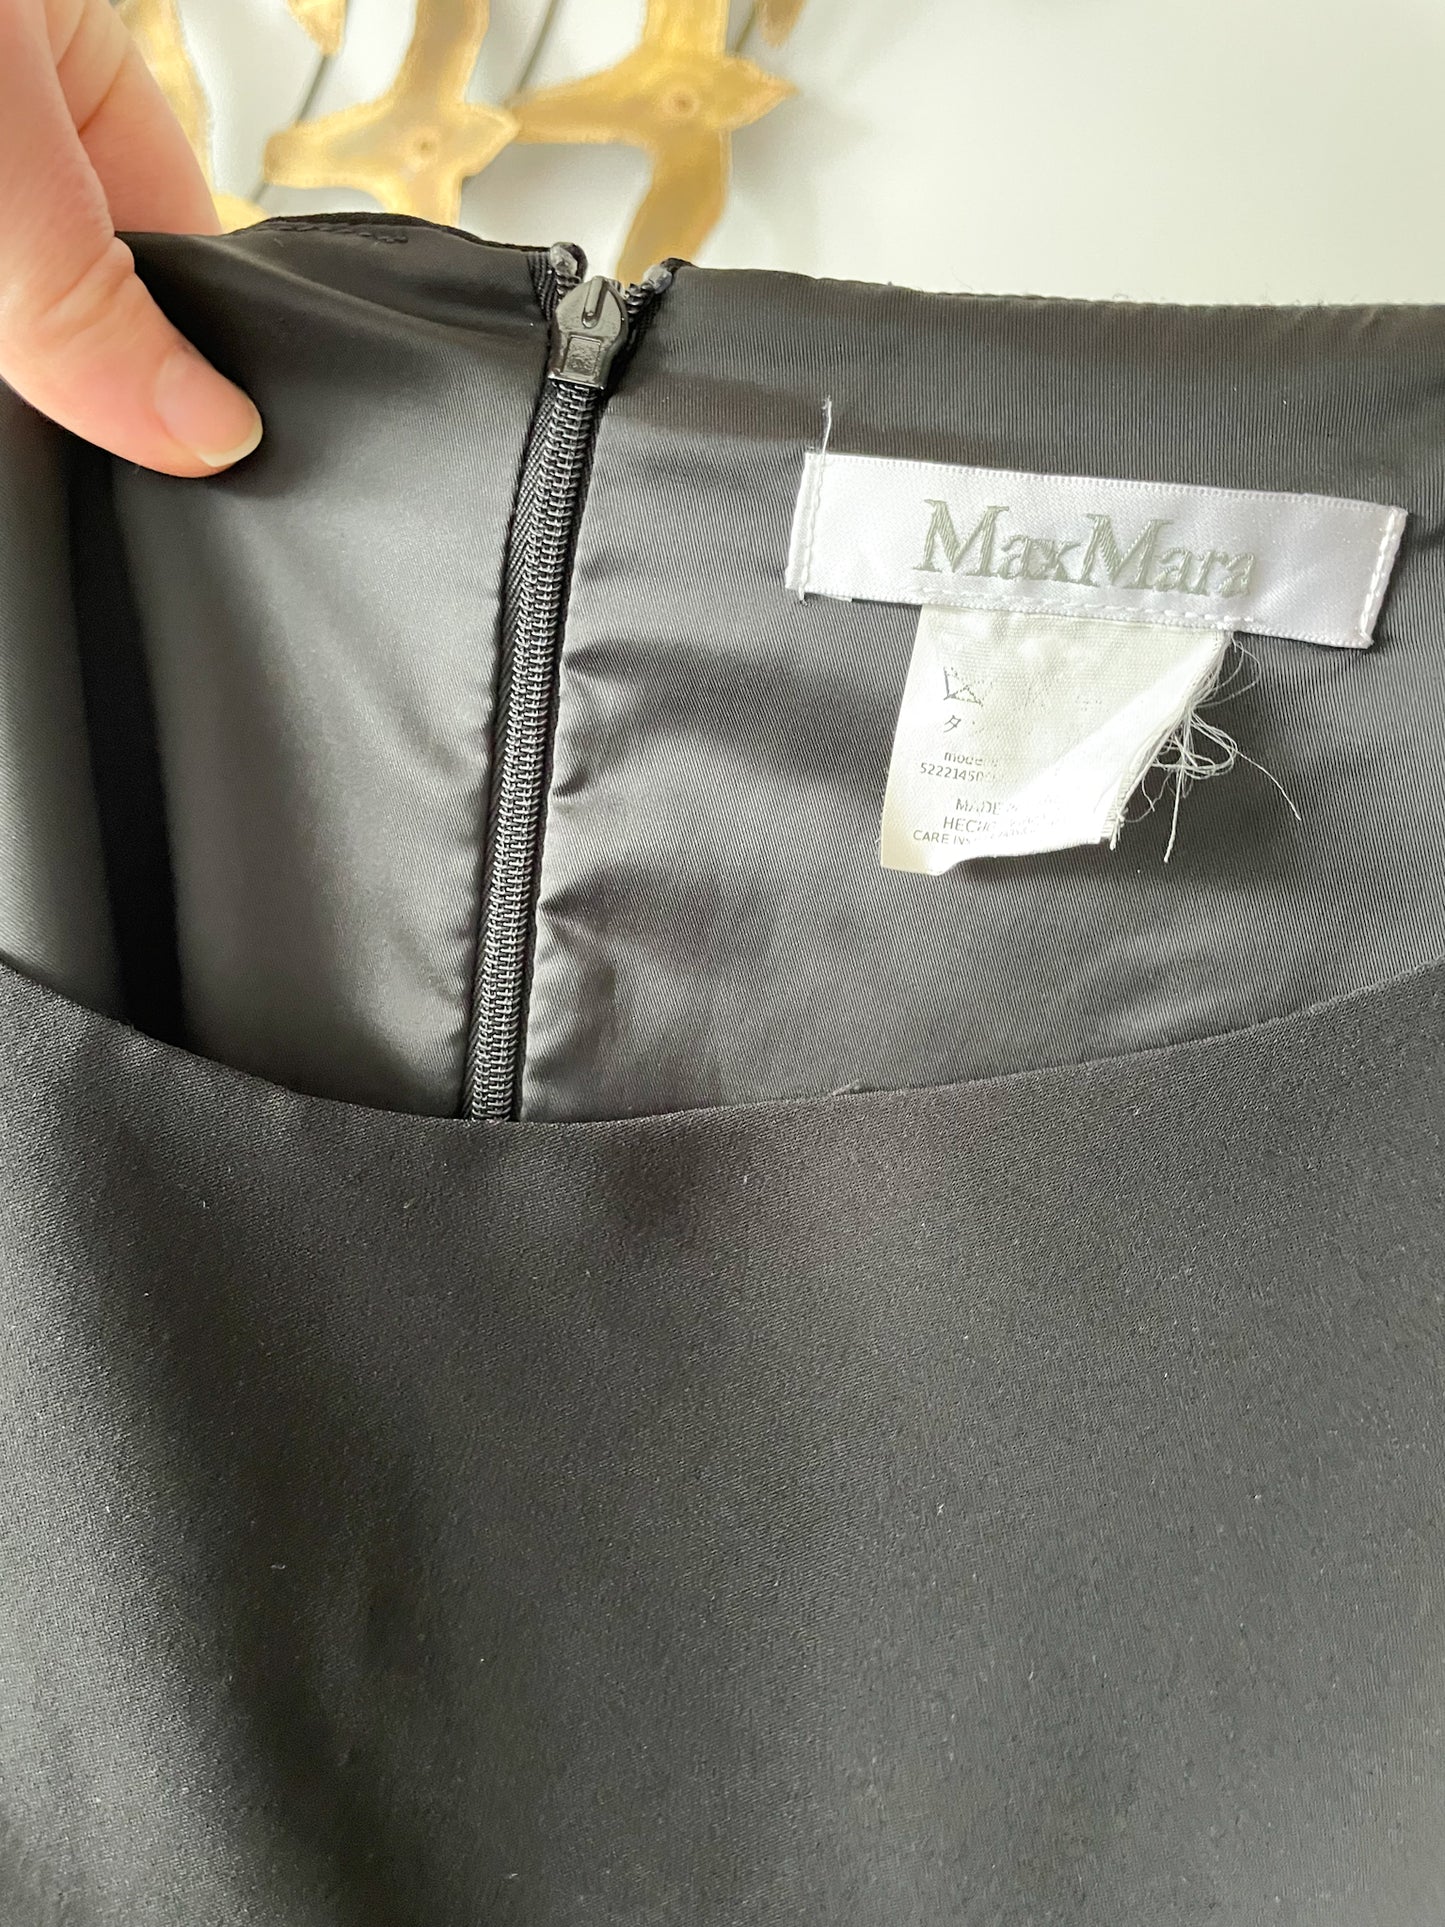 Max Mara Black Gathered Sheath Cap Sleeve Dress - Small